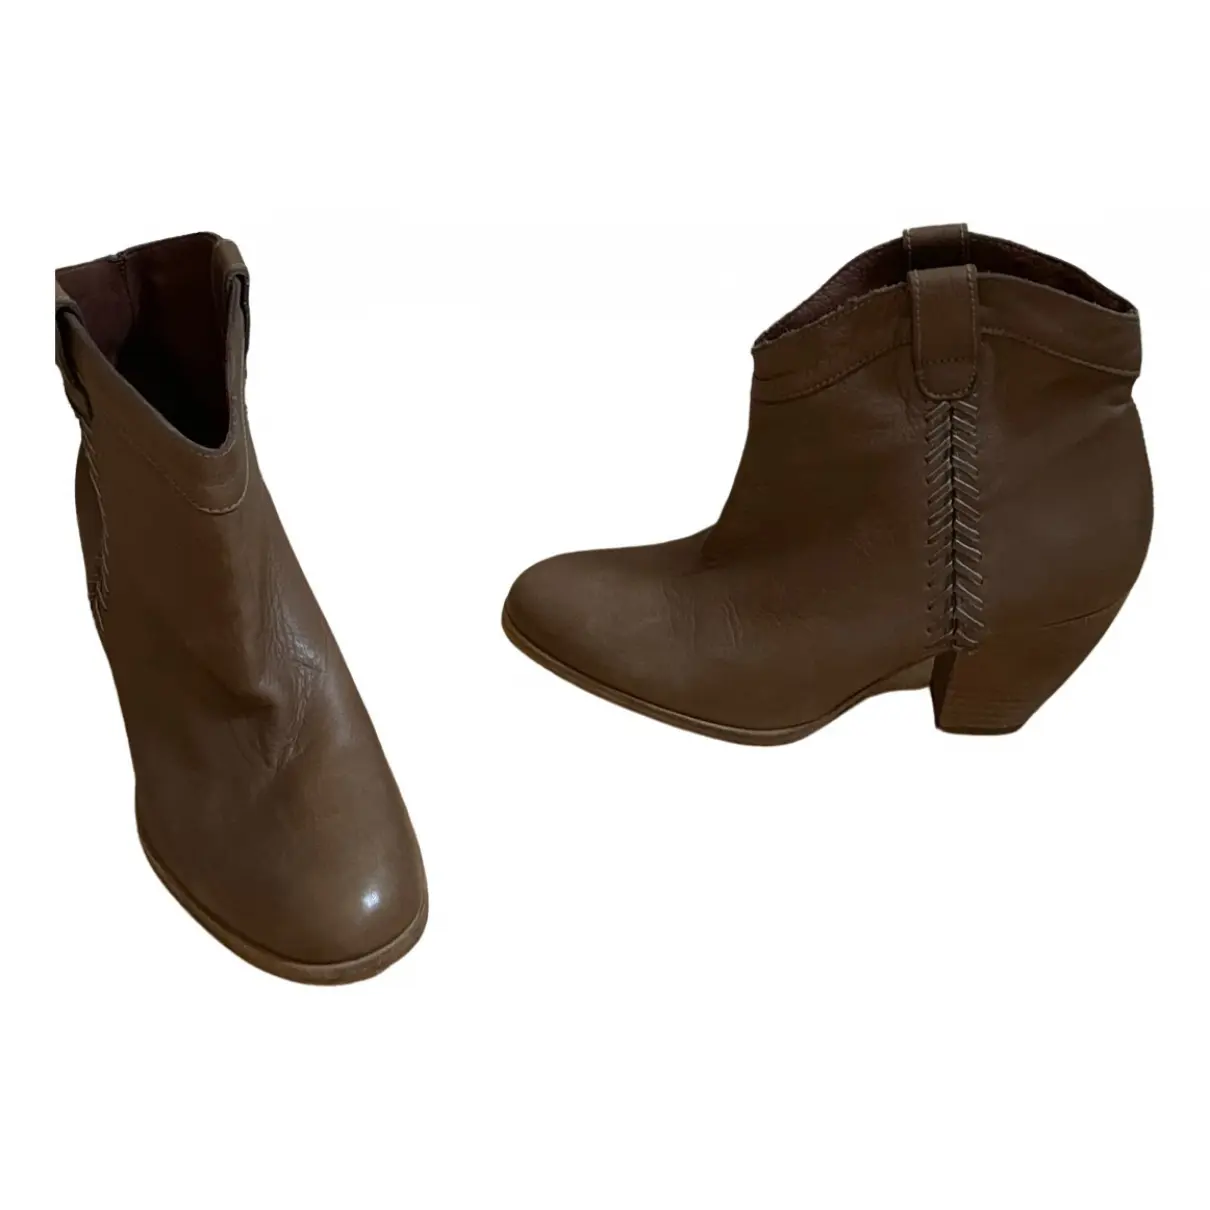 Leather western boots Tatoosh